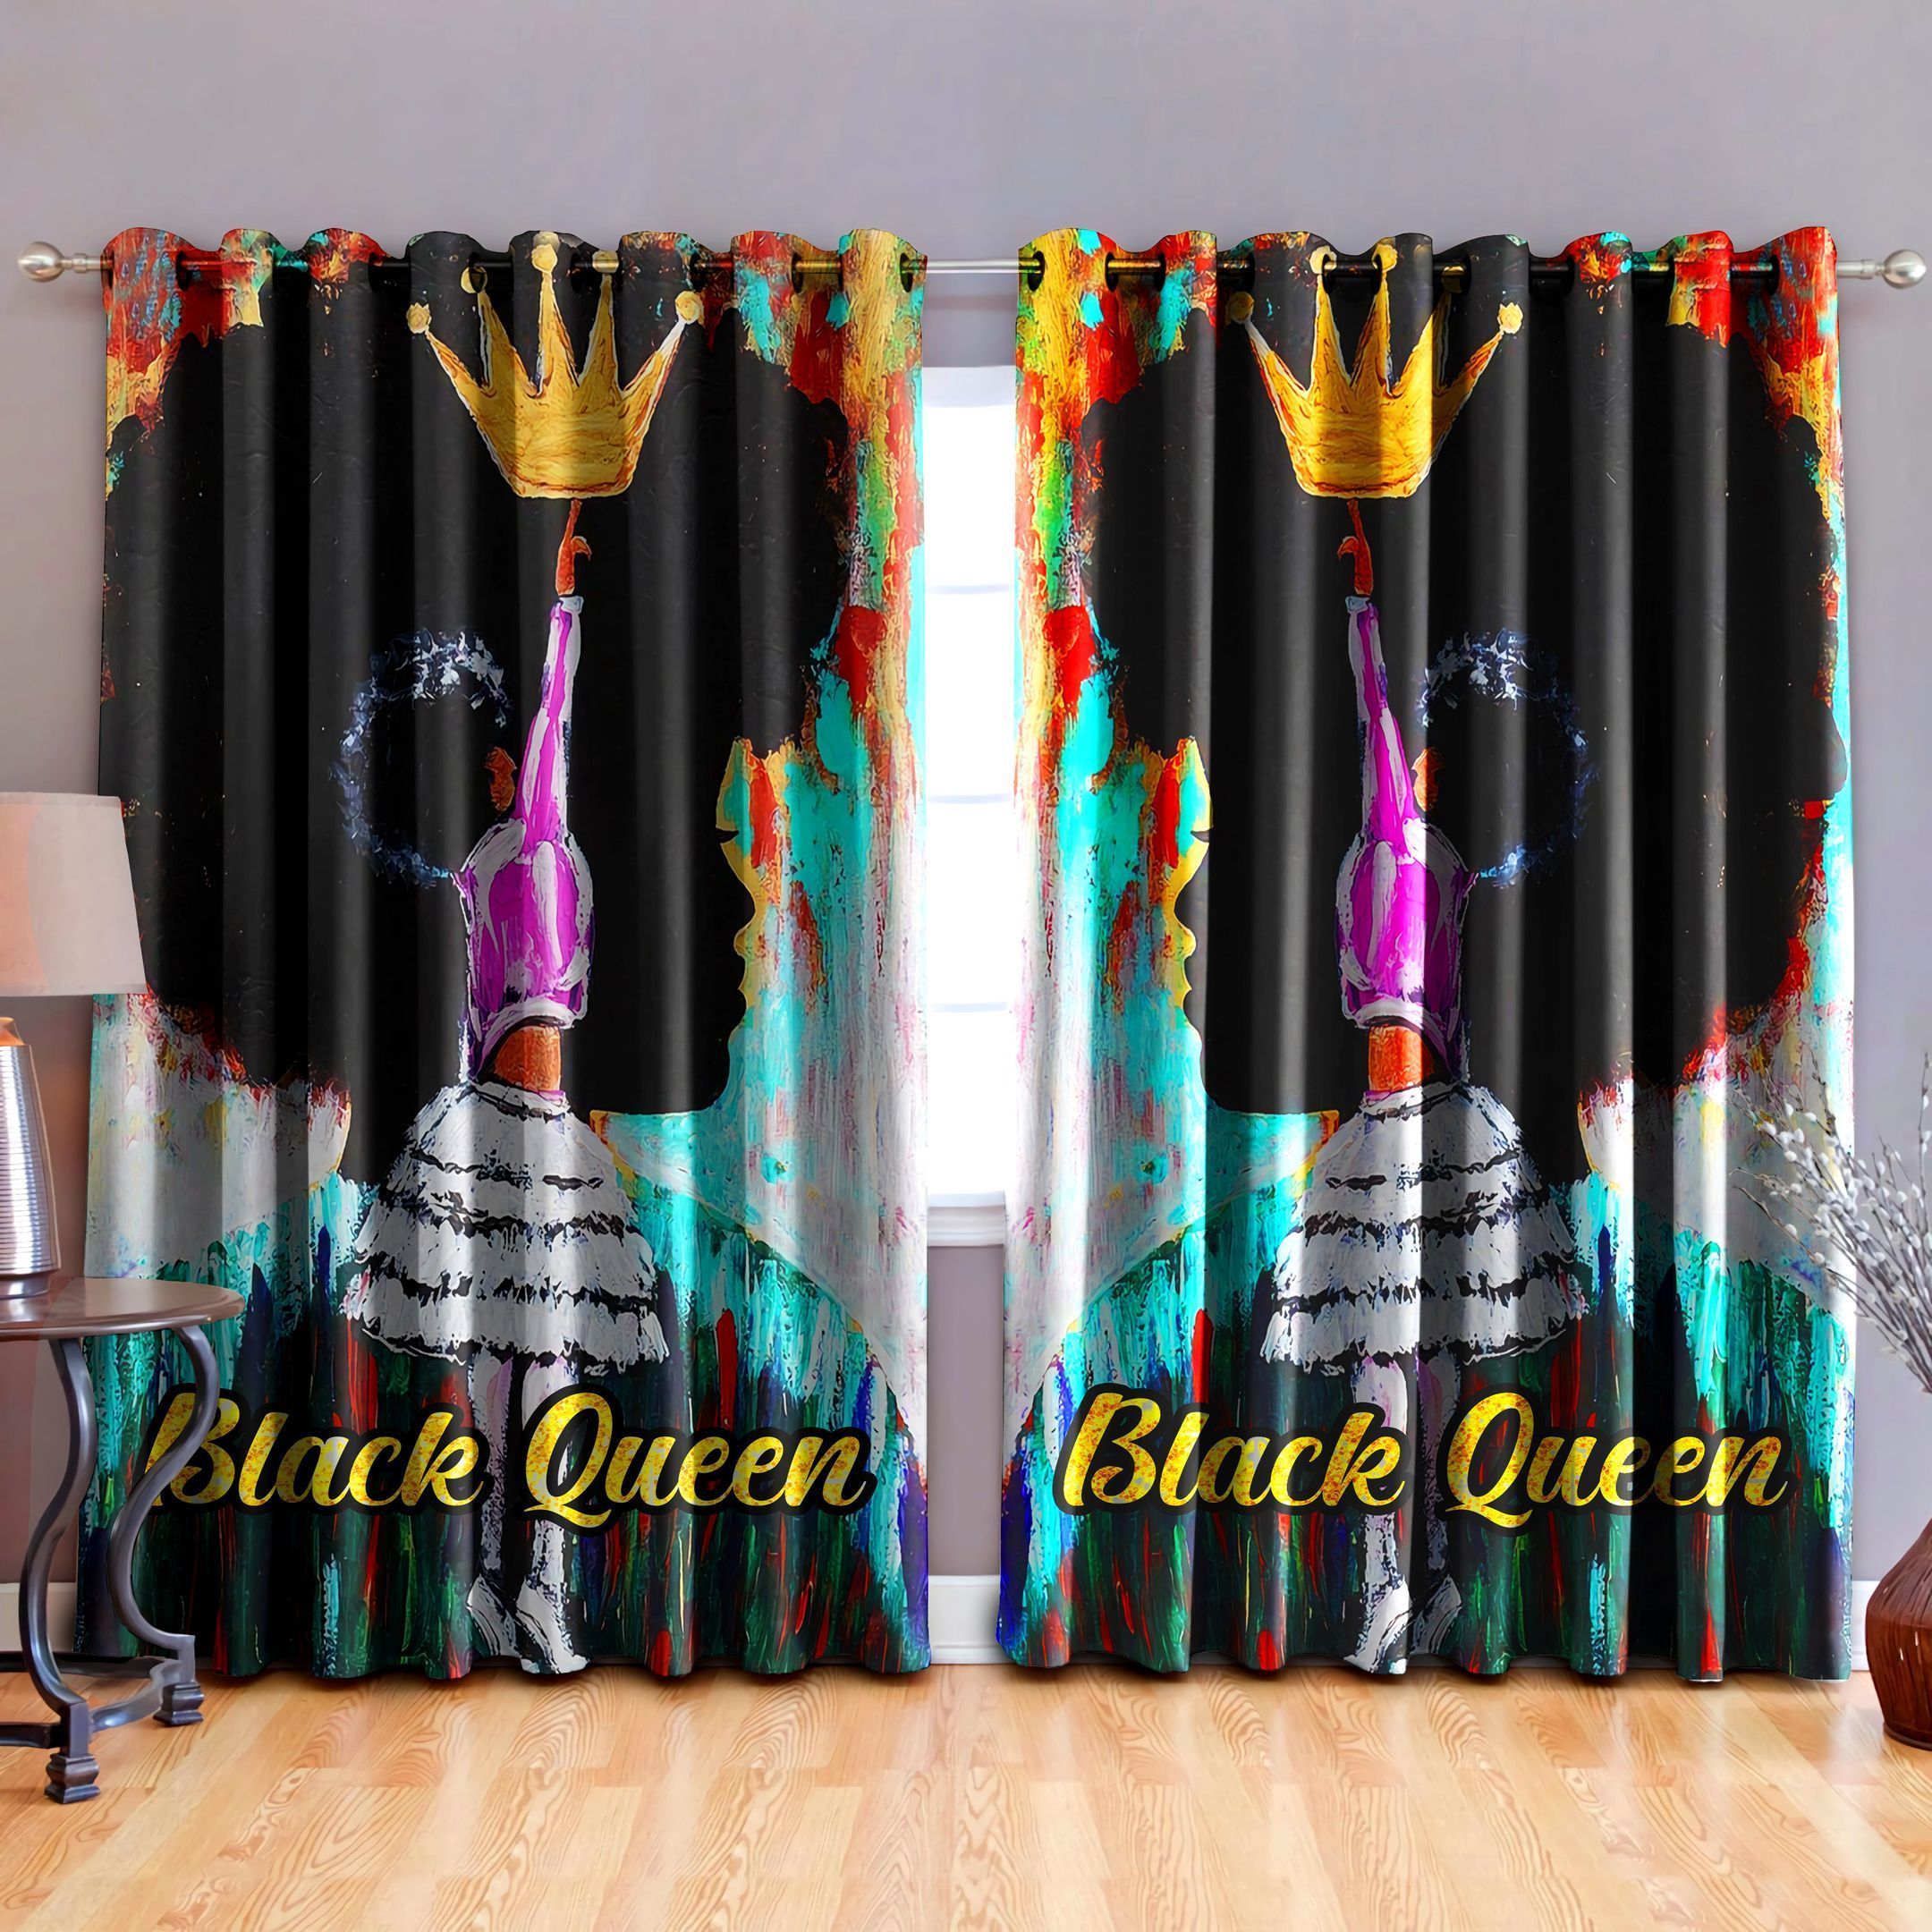 Black Girl Art Printed Window Curtain Home Decor